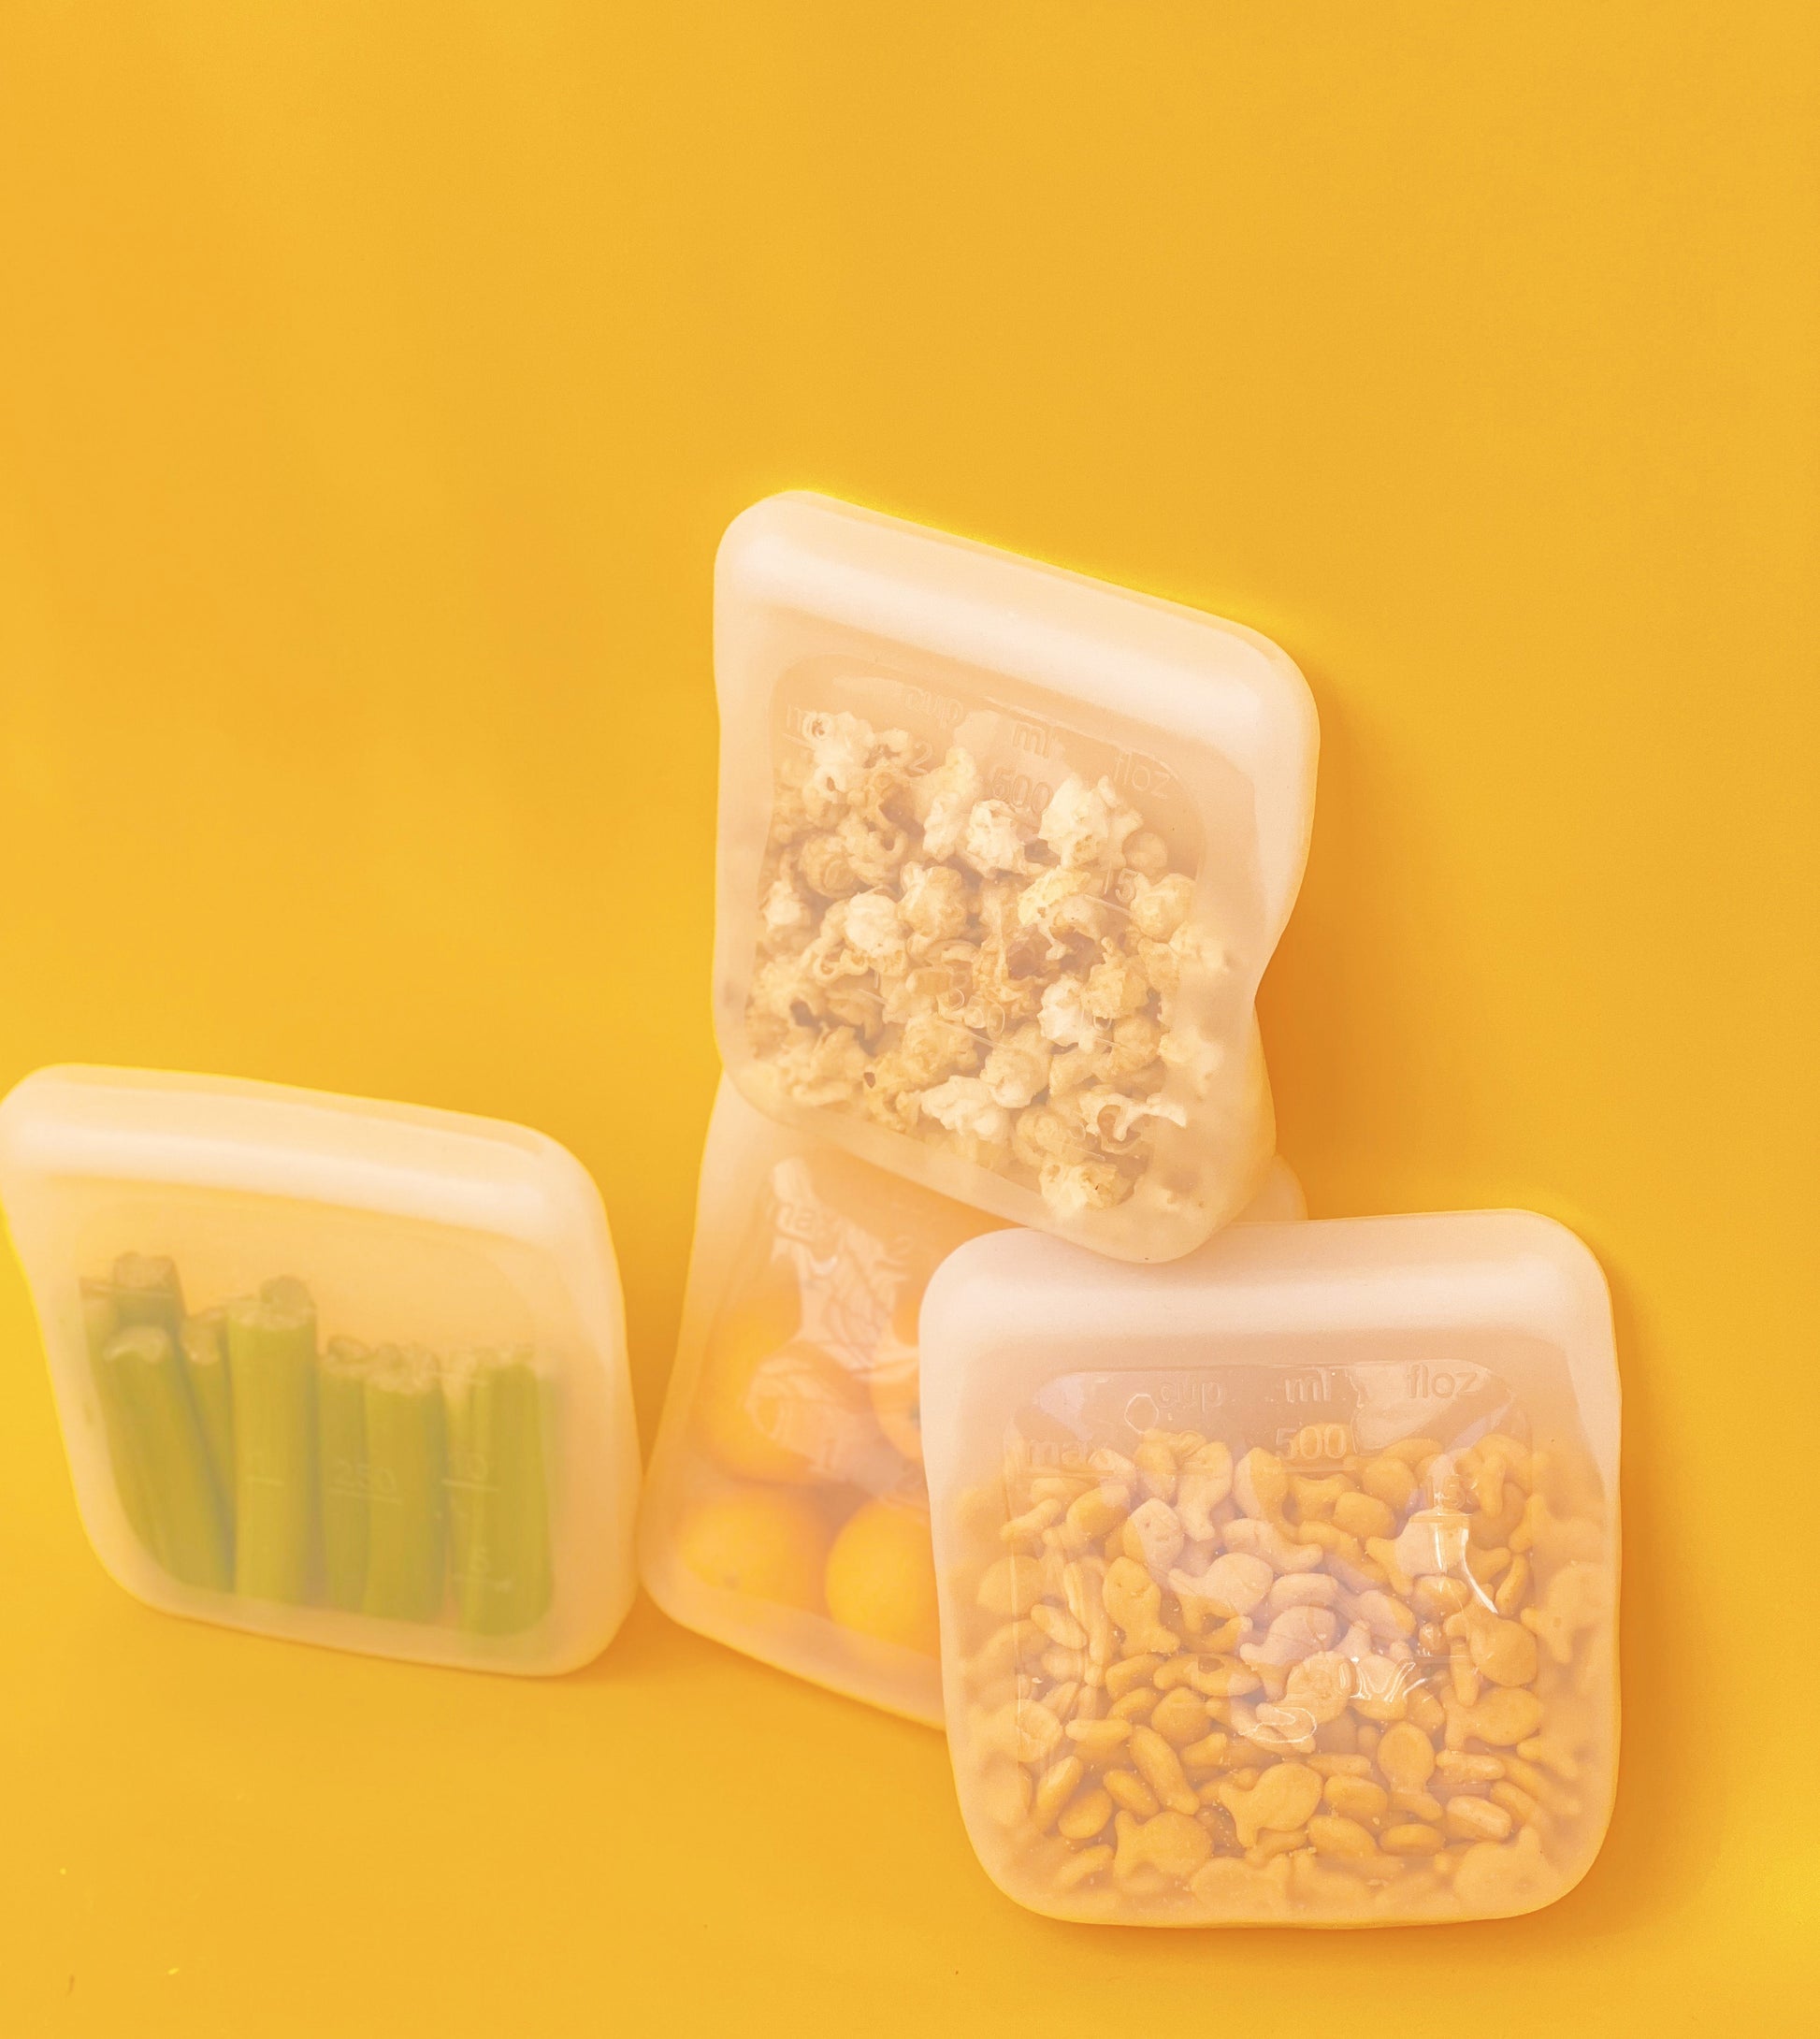 Reusable Ziplock Bags - Silicone Food Storage